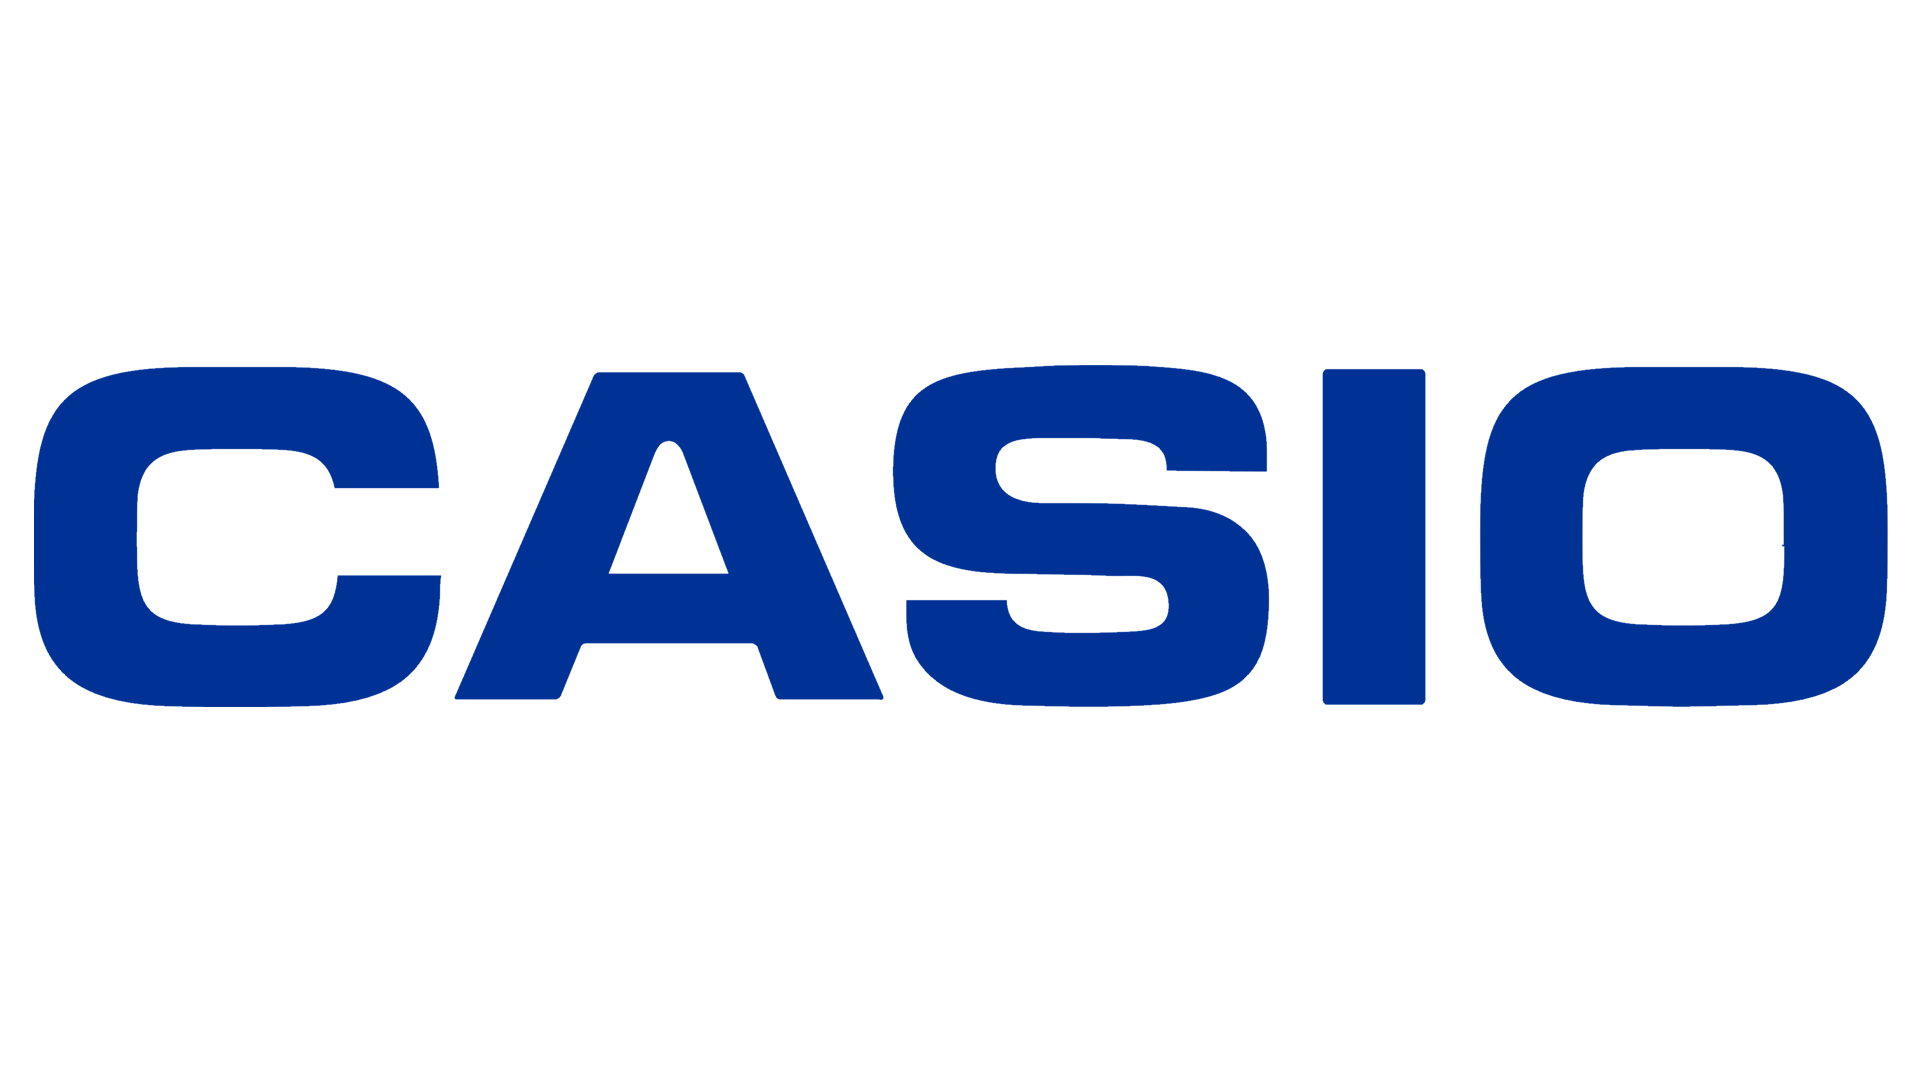 Casio Logo عبر الإنترنت والتسوق عبر الإنترنت وتجارة التجزئة والجملة والتجزئة الصفحة الرئيسية